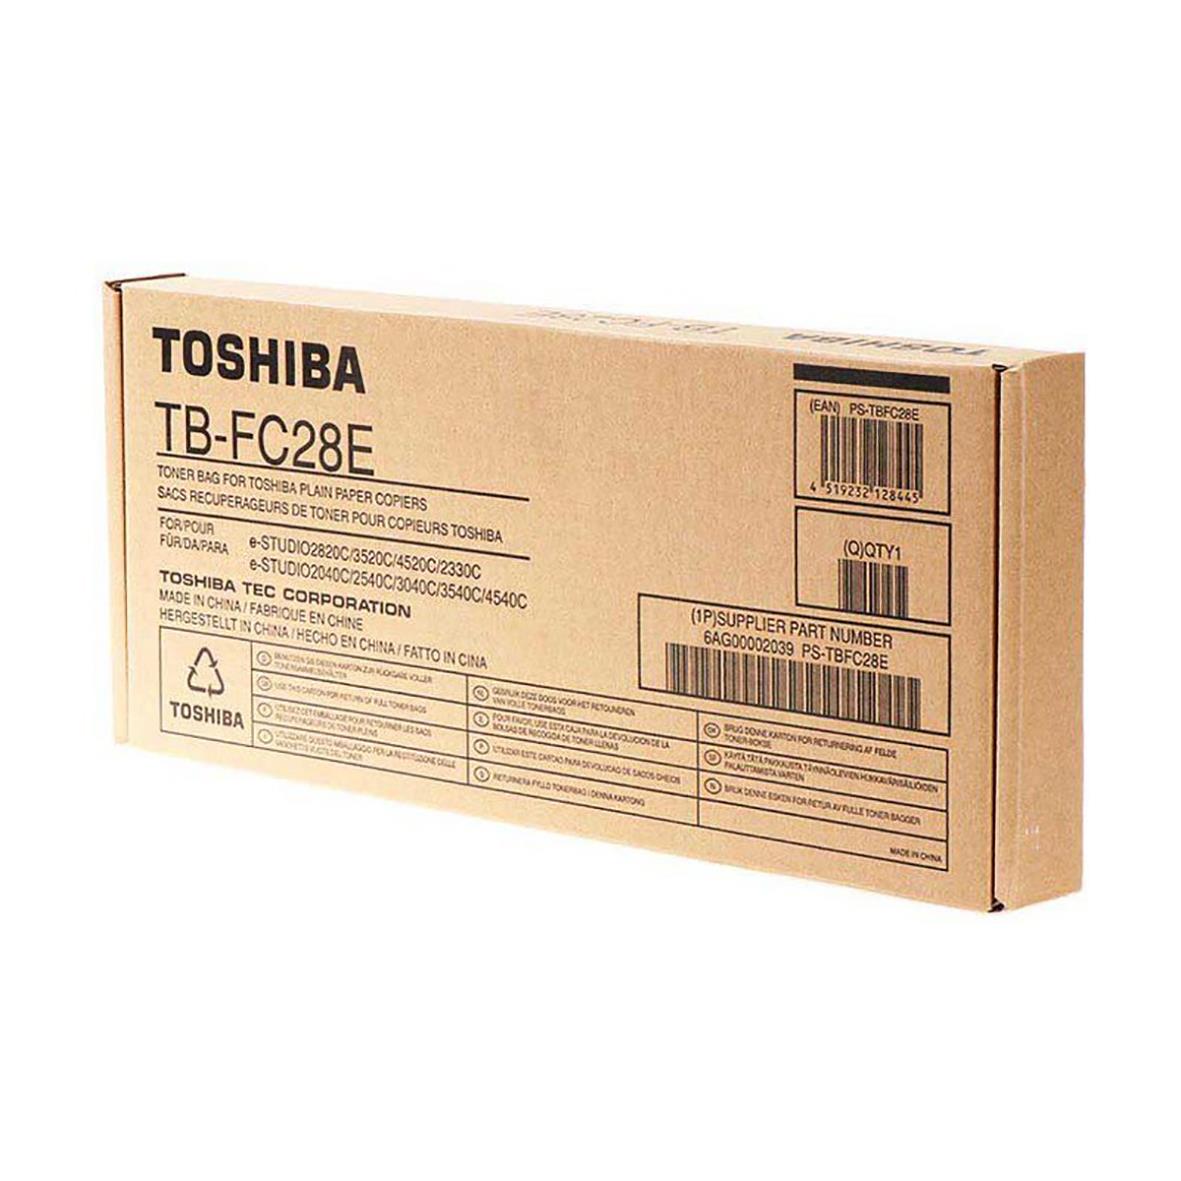 Waste toner box Toshiba TB-FC28E 6AG00002039